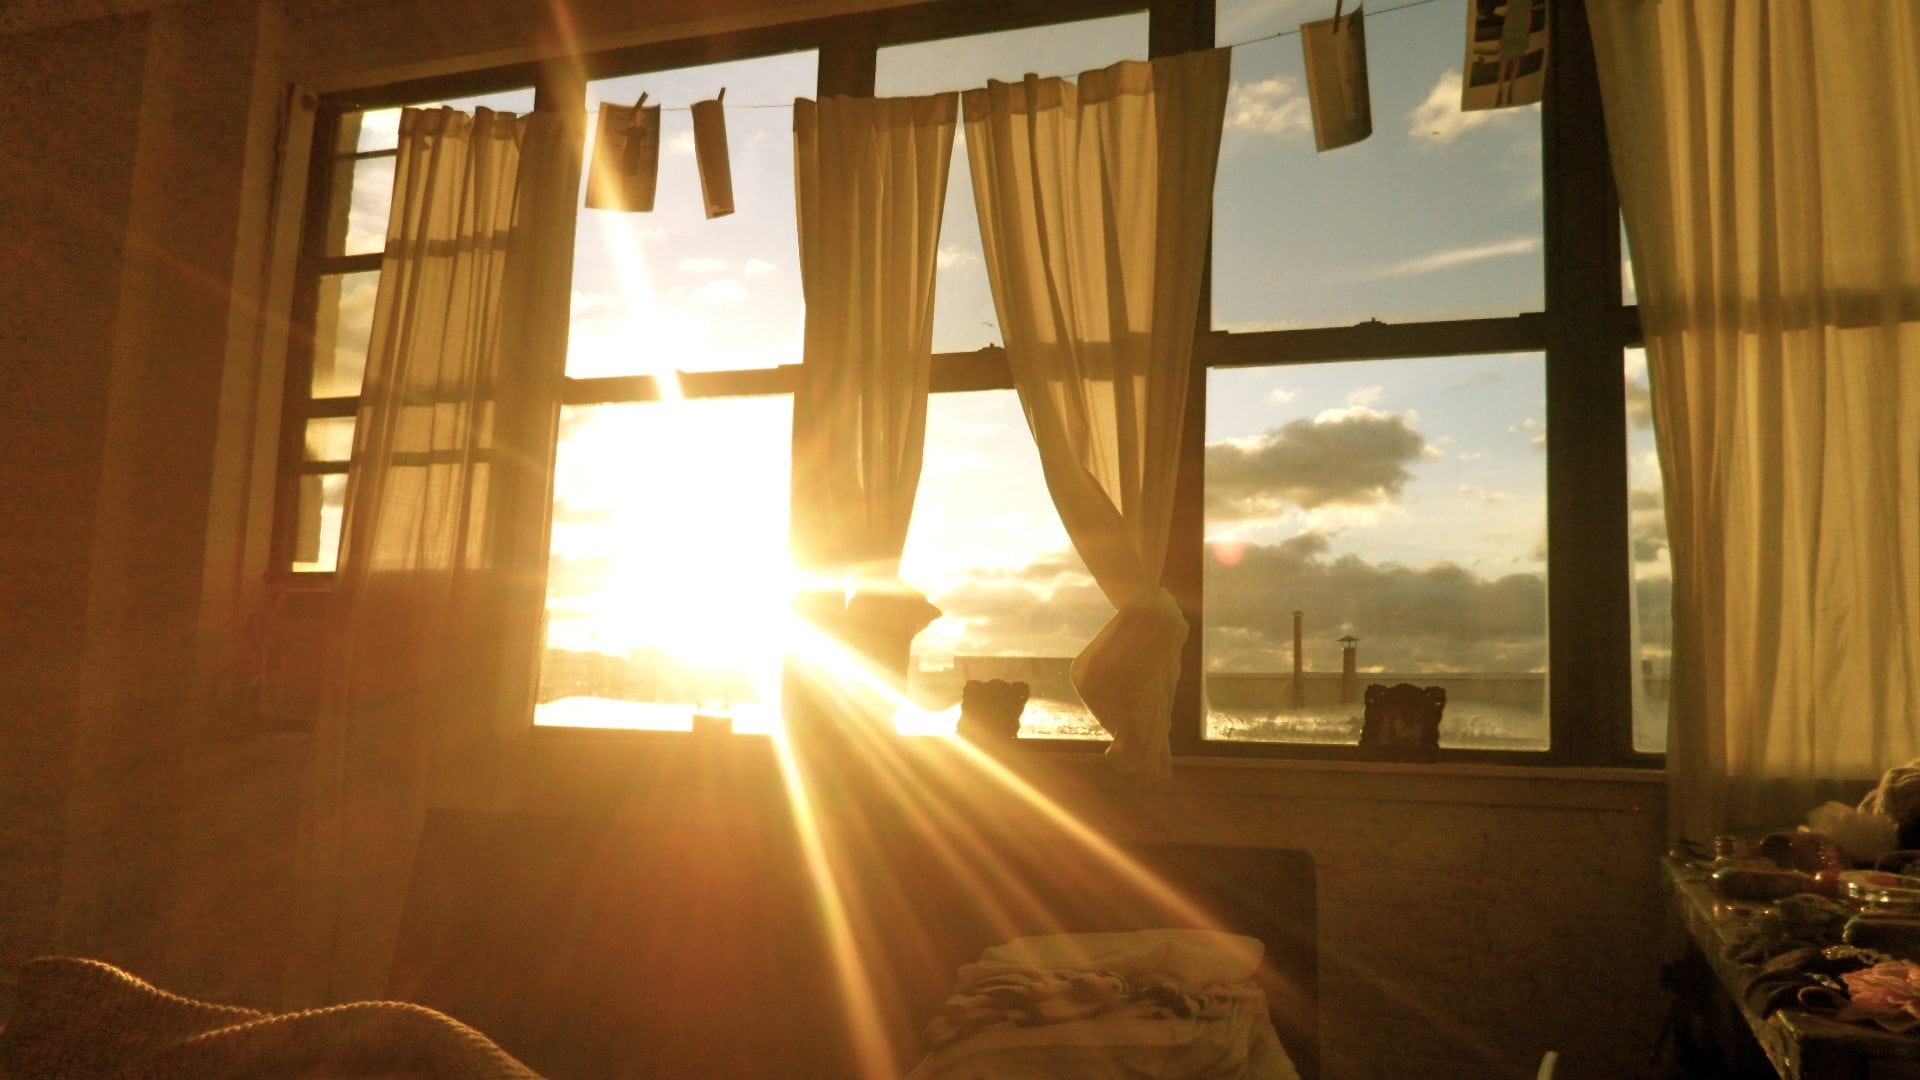 1 комната солнечный свет ангел. Солнечный свет в окно. Солнце светит в окно. Луч солнца в окне. Лучи солнца в комнате.